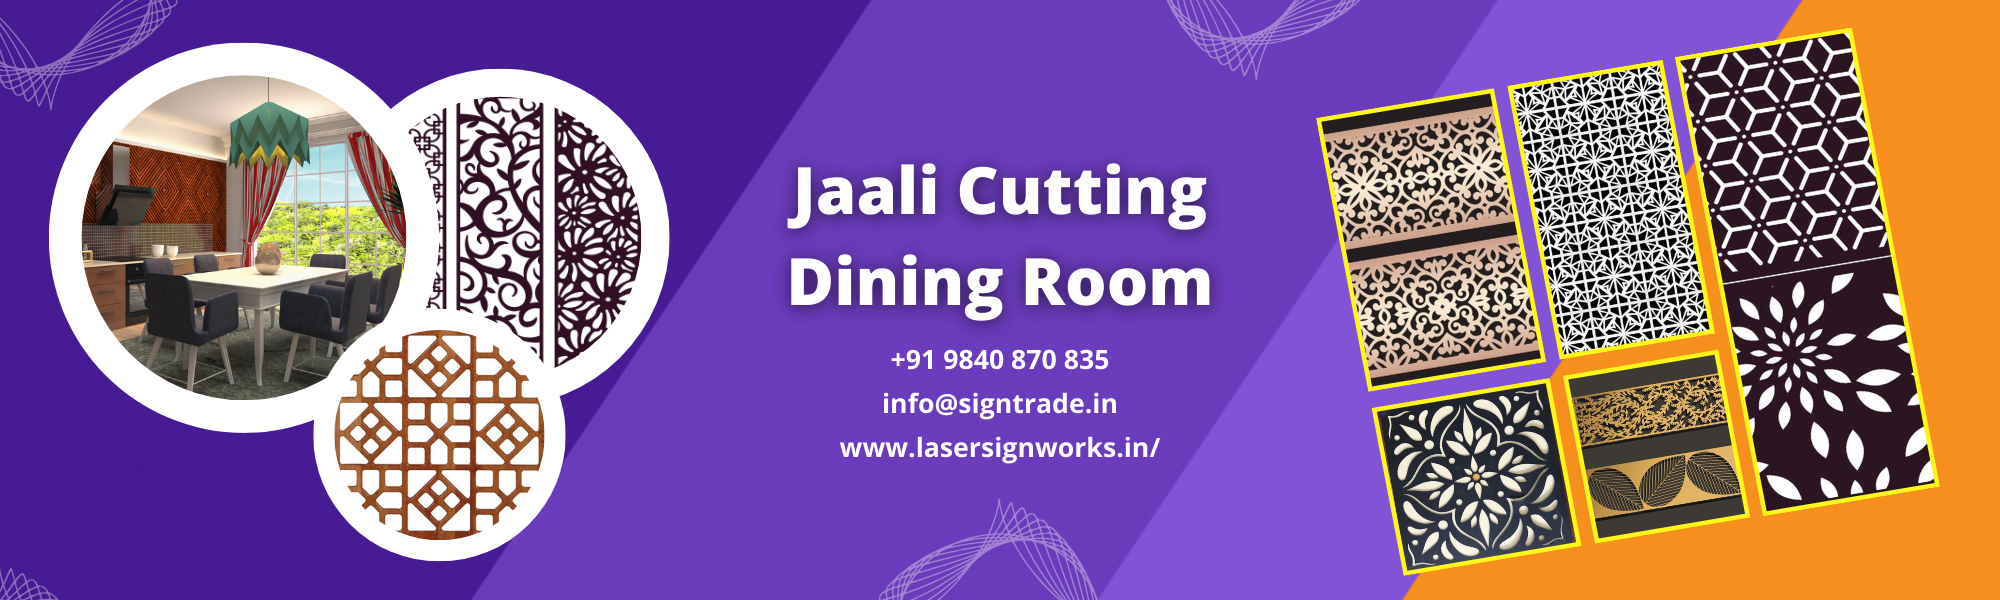 Jaali Cutting Dining Room